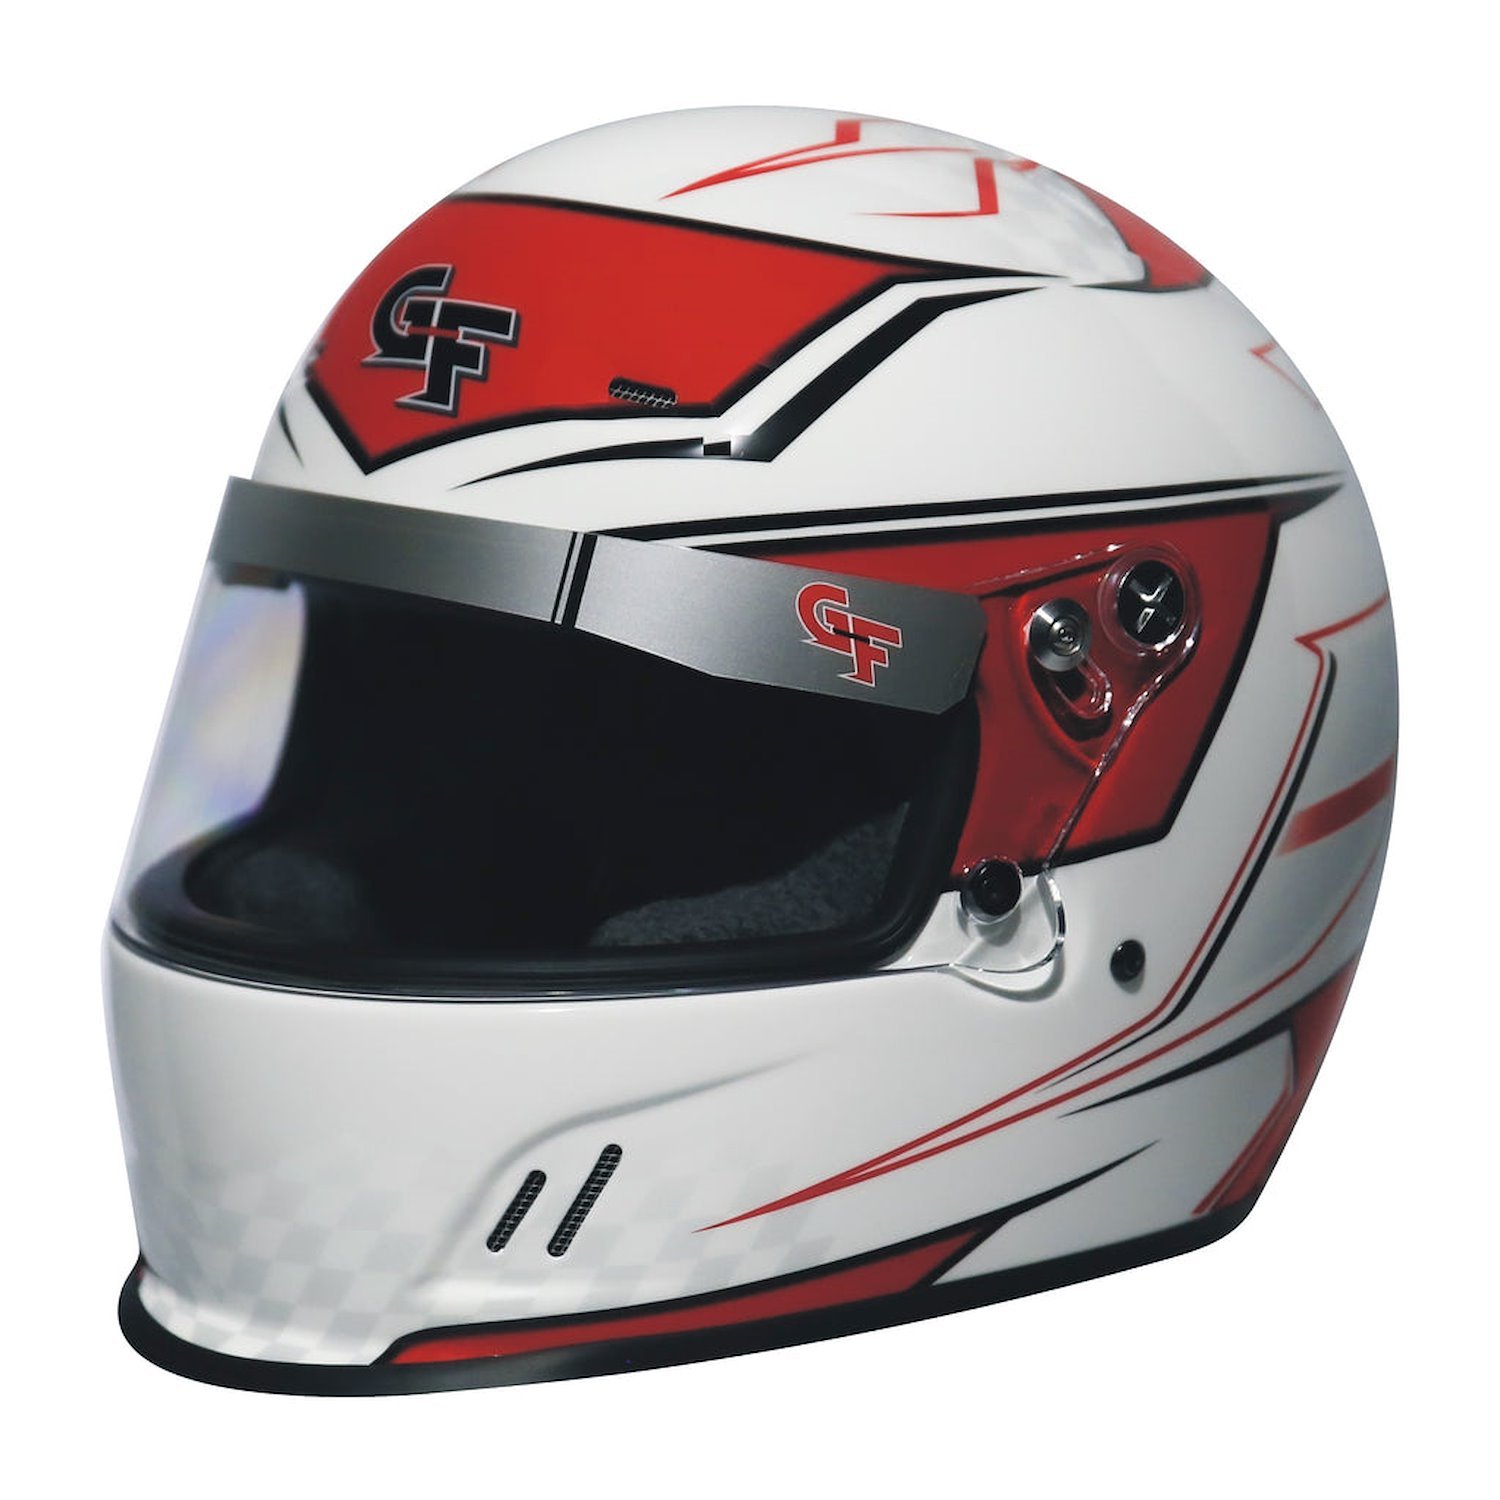 13402MEDRD Helmet, CMR Graphics, Medium, White/Red